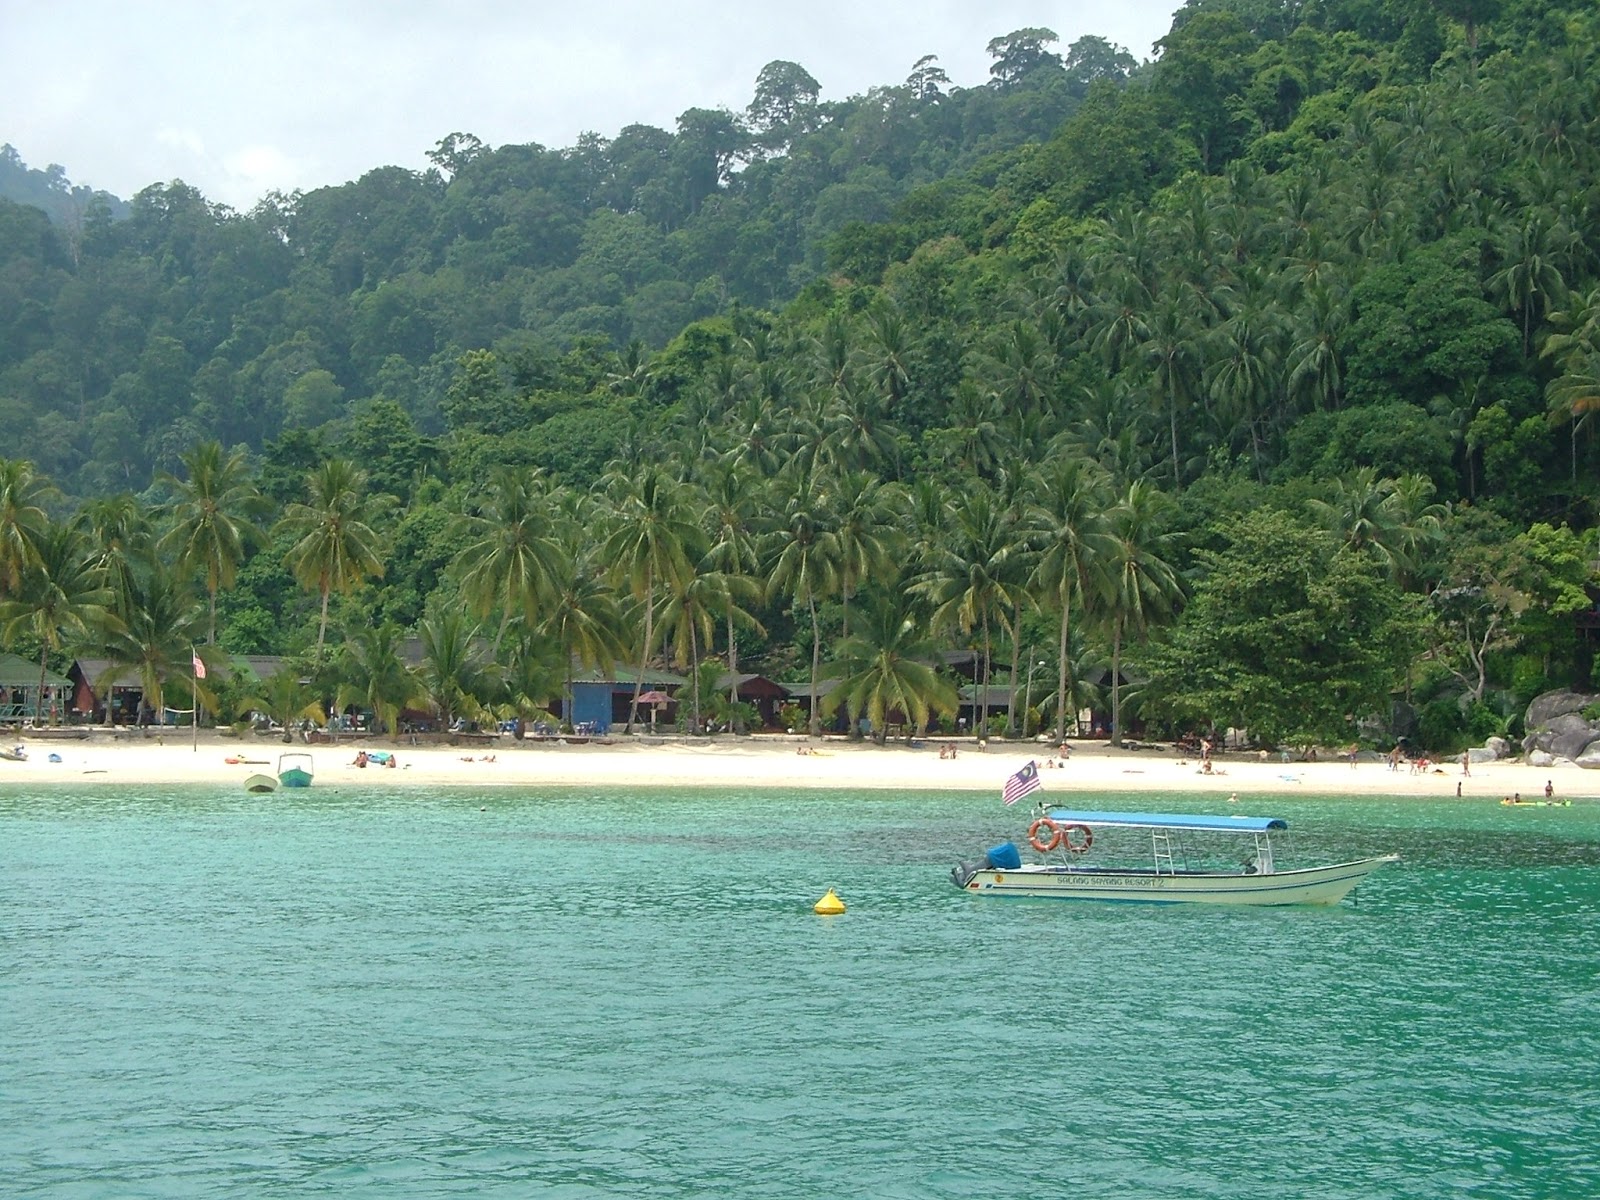 Foto di Kampung Tekek Beach con una superficie del acqua cristallina